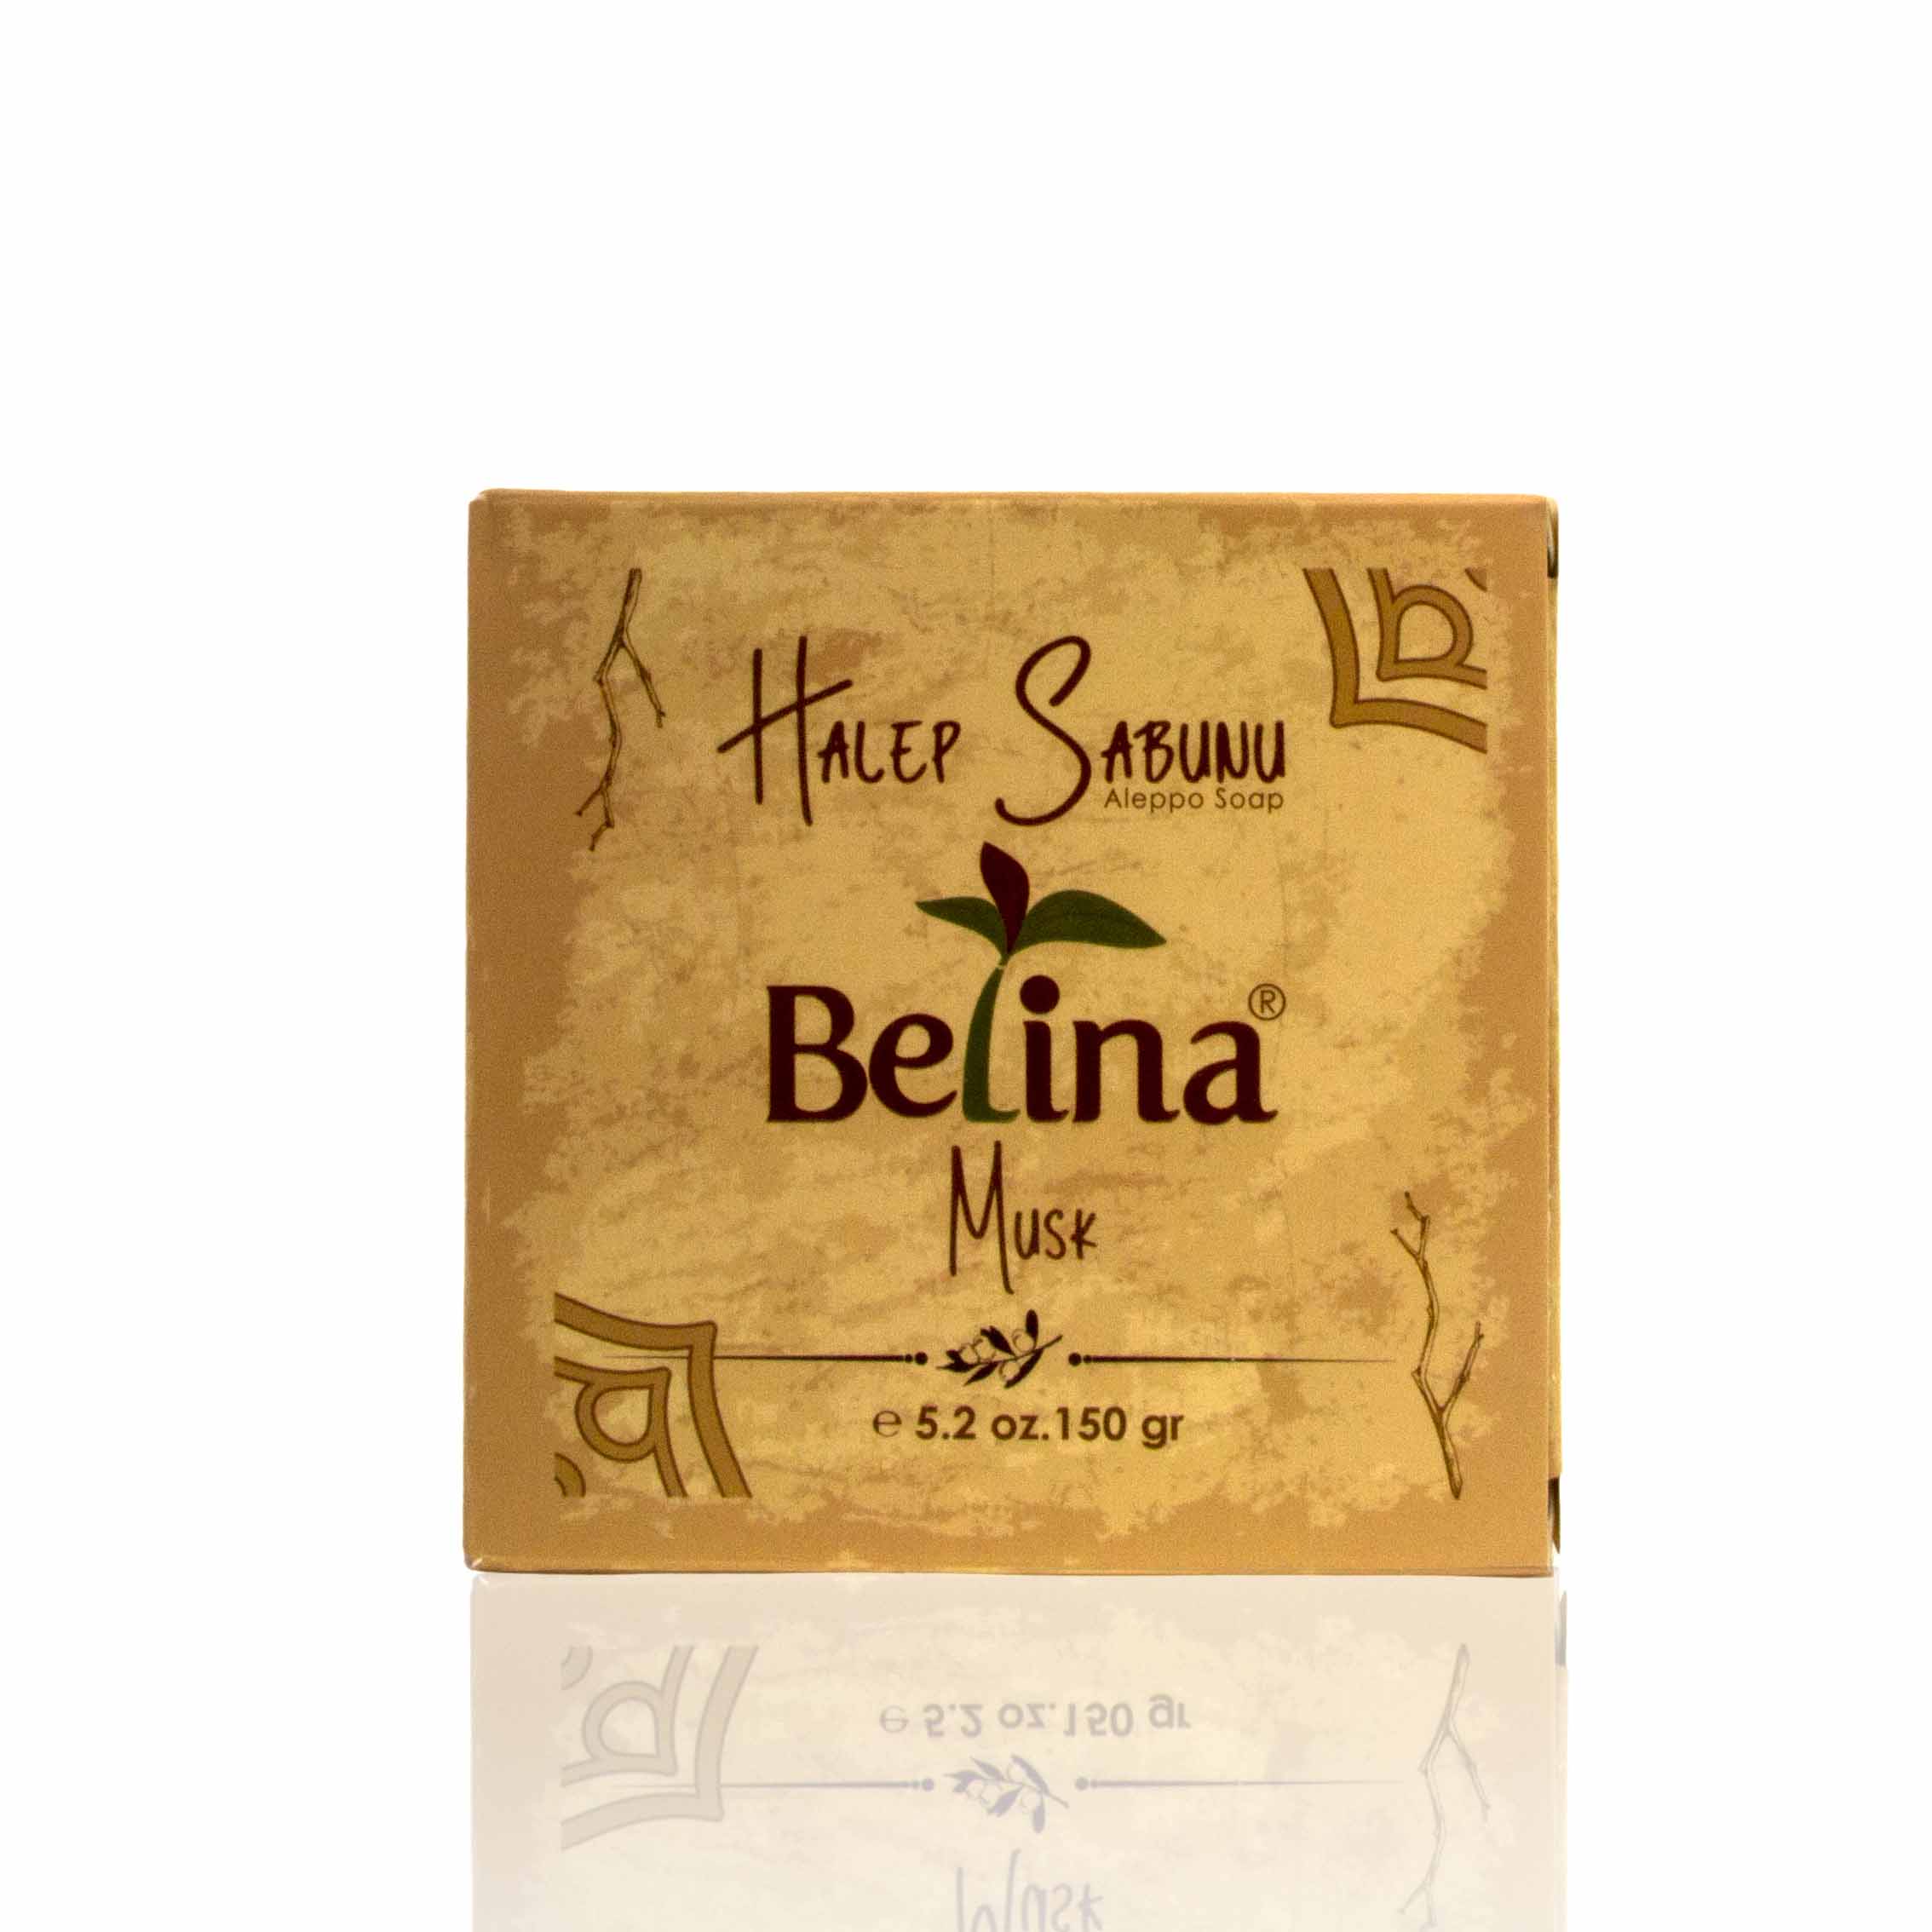 Syrian Soap 2% oil of laurel musk fragrance - Zdrava Belina ...